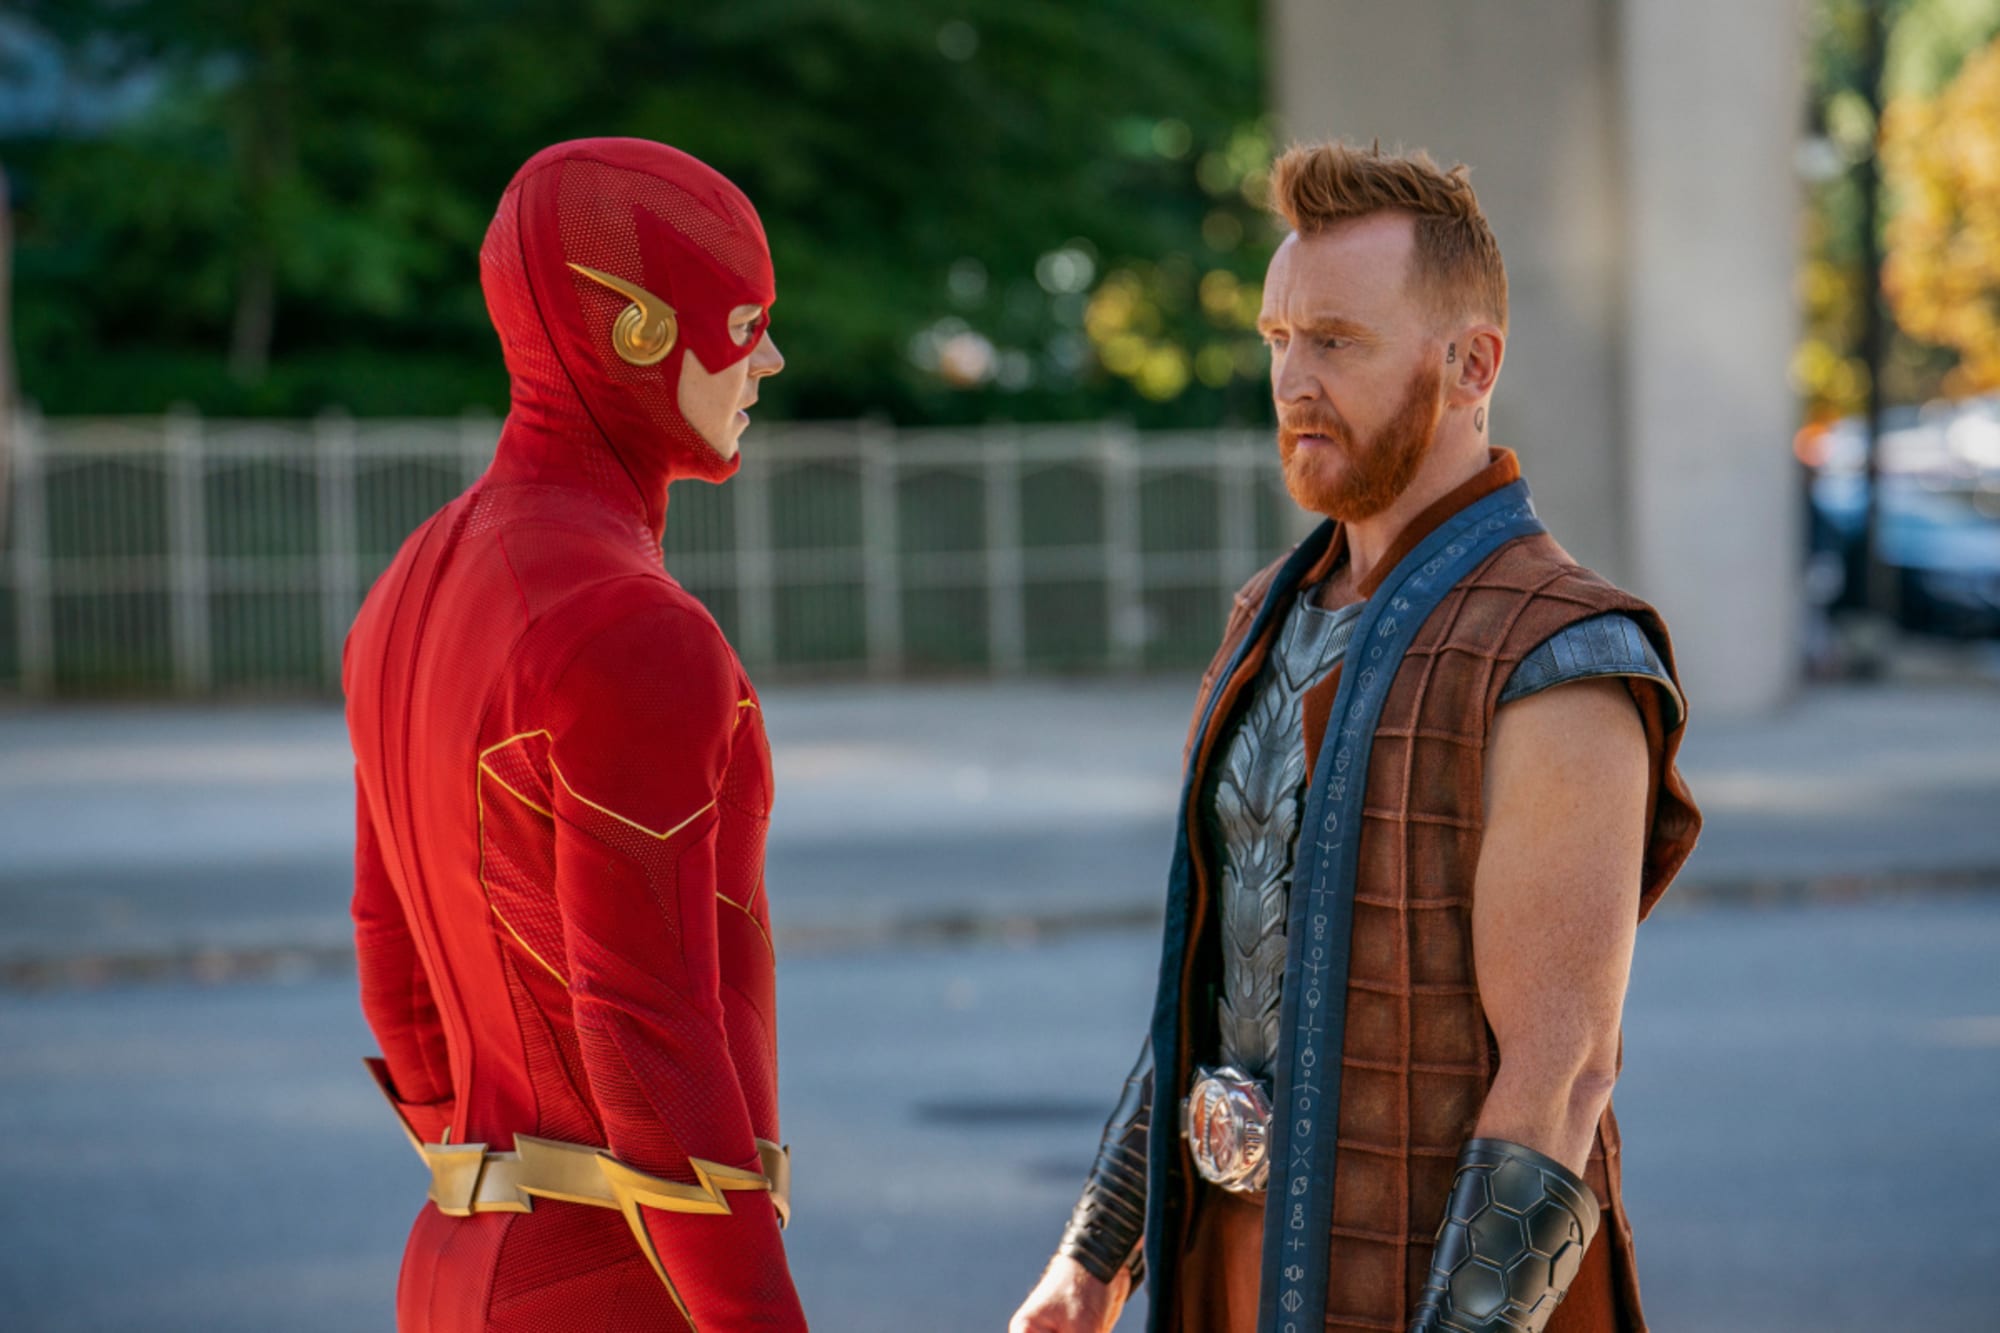 Watch The Flash season 8, episode 2 promo trailer